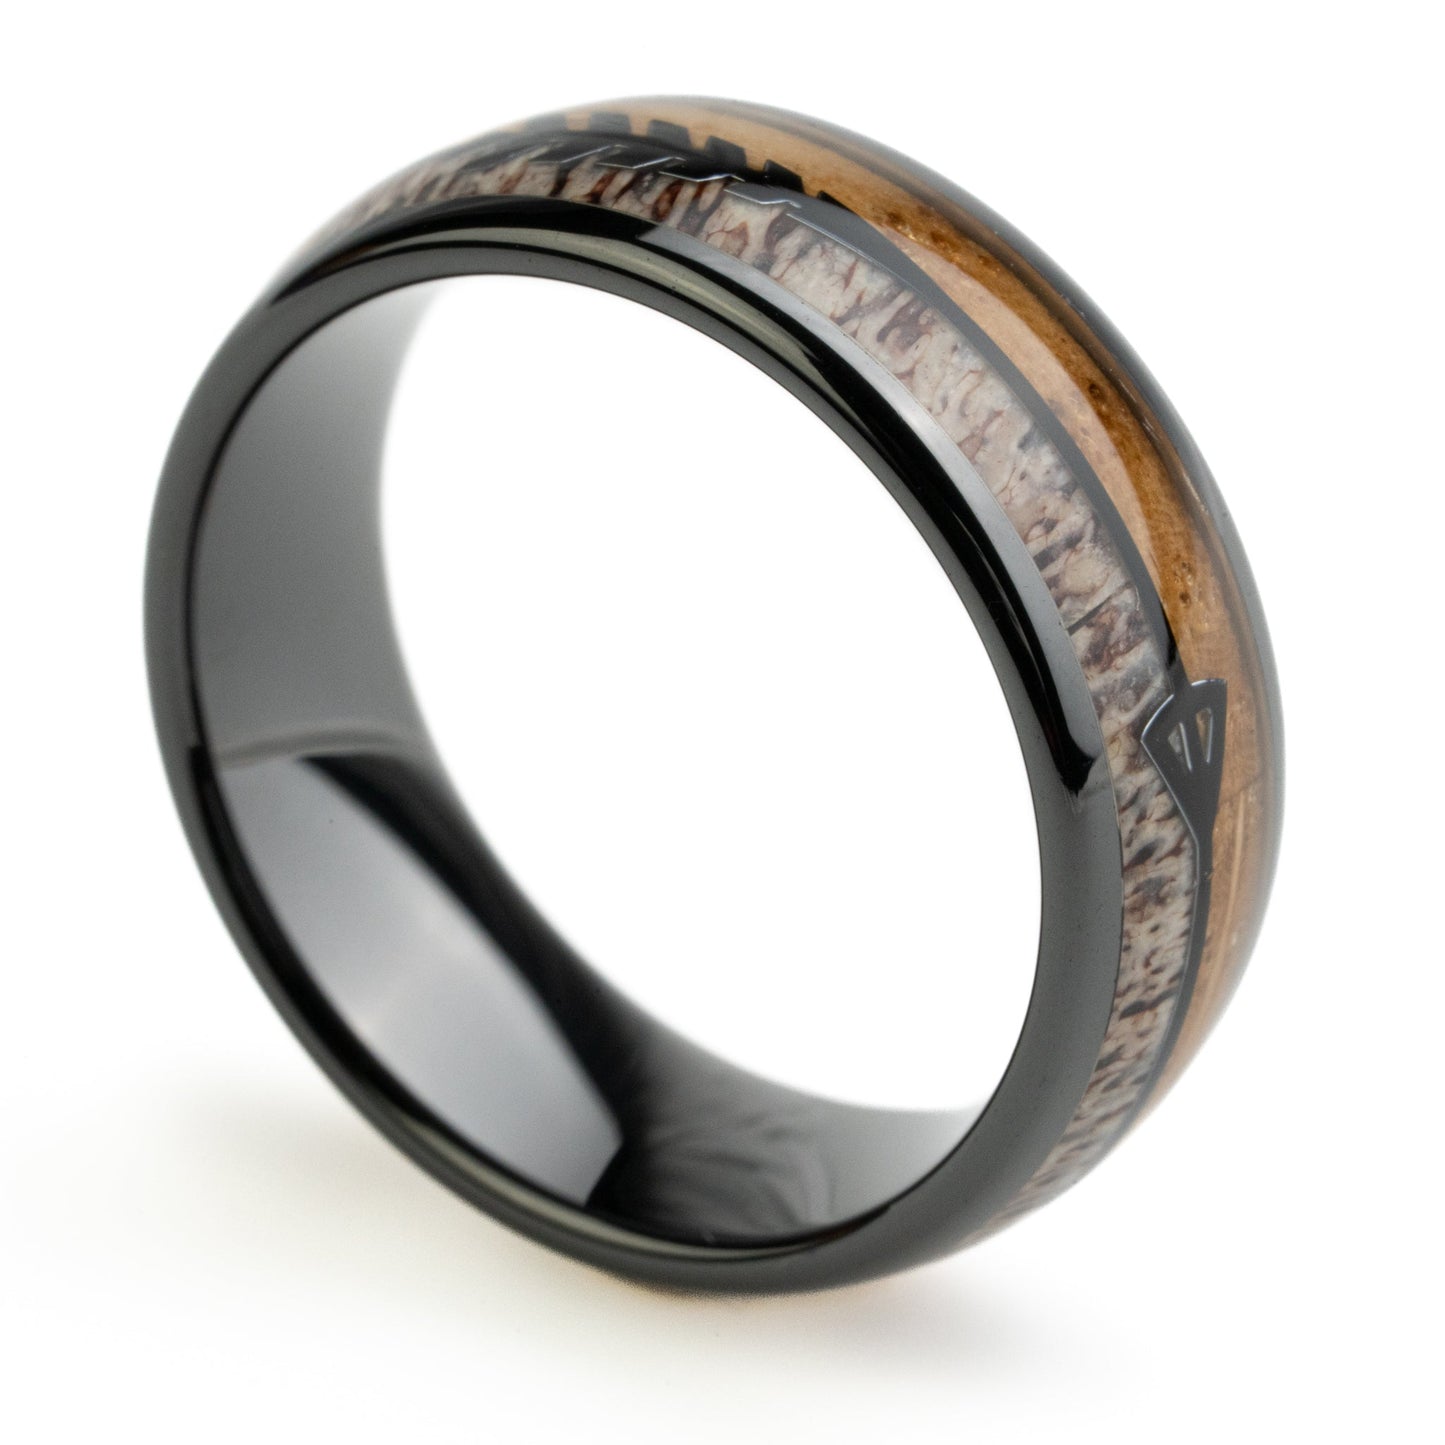 The “Explorer” Ring by Vintage Gentlemen